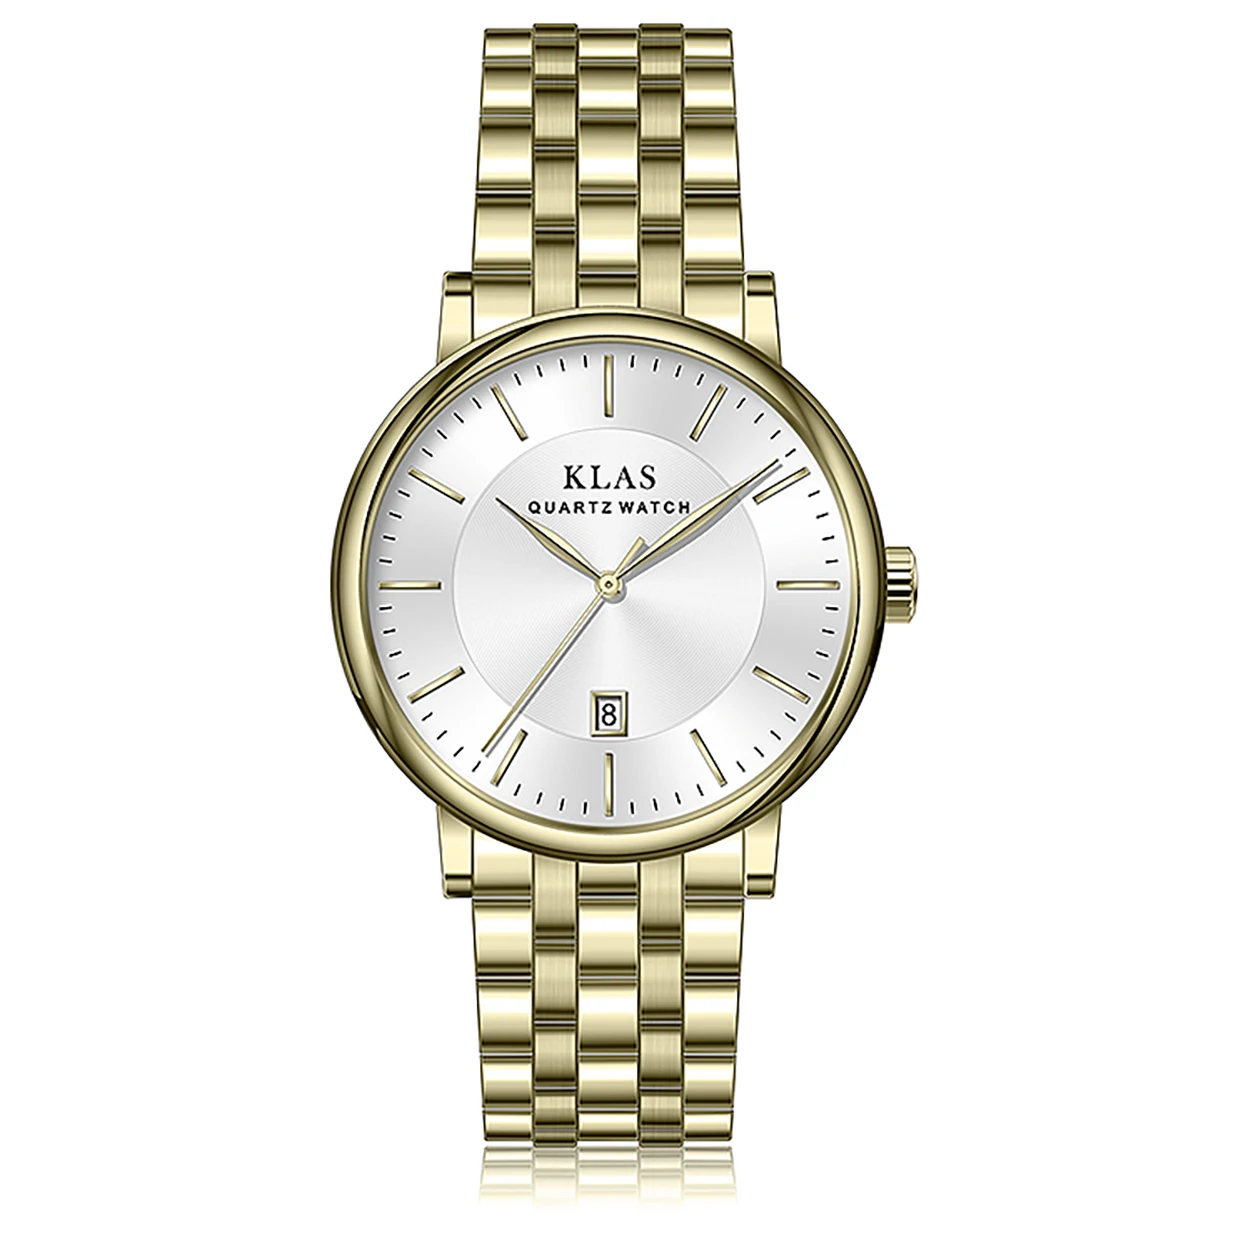 Men's watch 2021 new fashion gold waterproof top brand men's luxury quartz watch KLAS brand